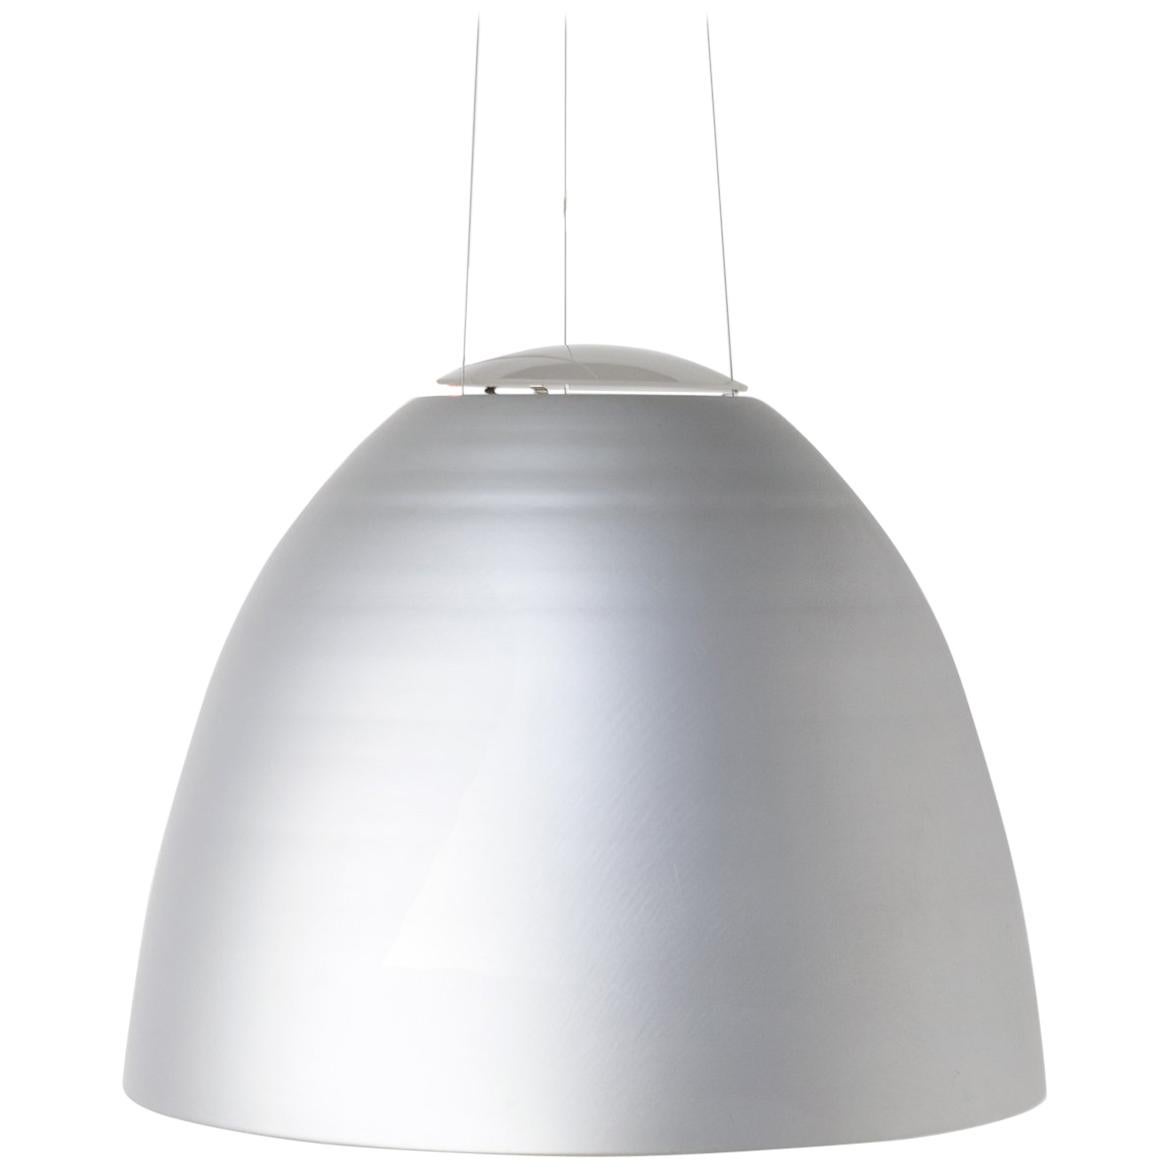 Ernesto Gismondi ‘NUR’ Dimmable Hanging Lamp for Artemide For Sale